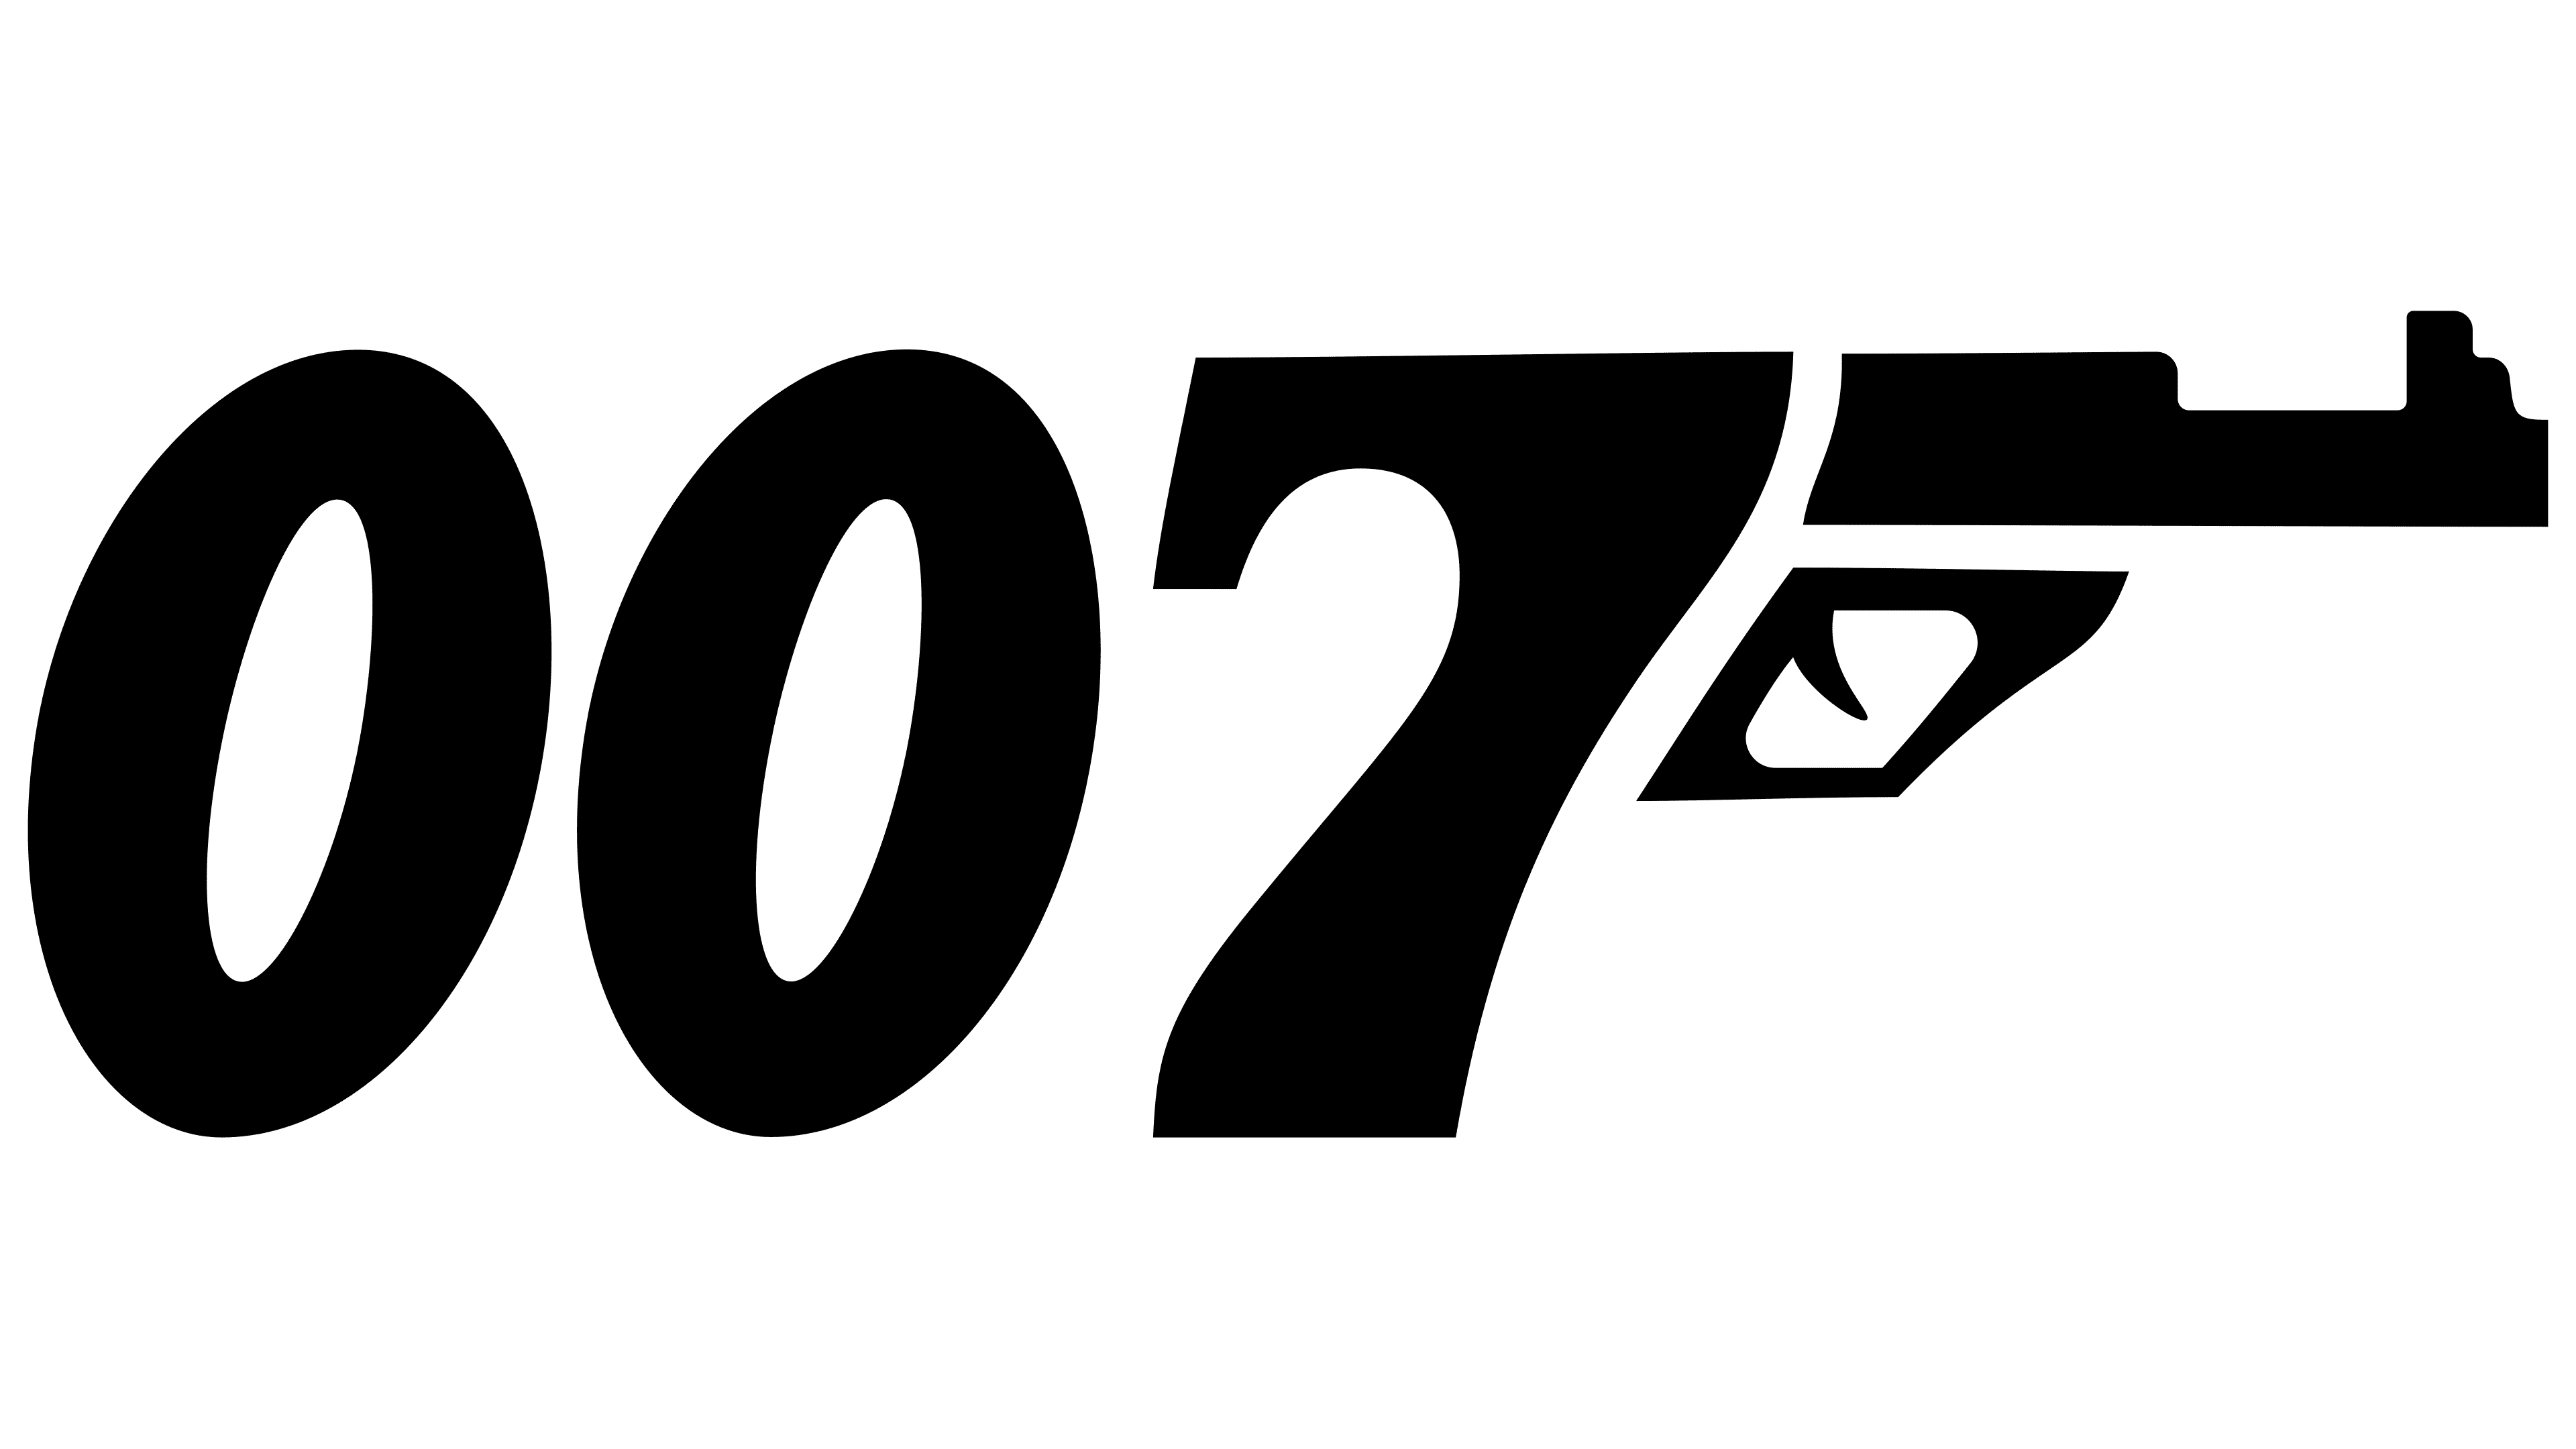 James Bond Logo, symbol, meaning, history, PNG, brand